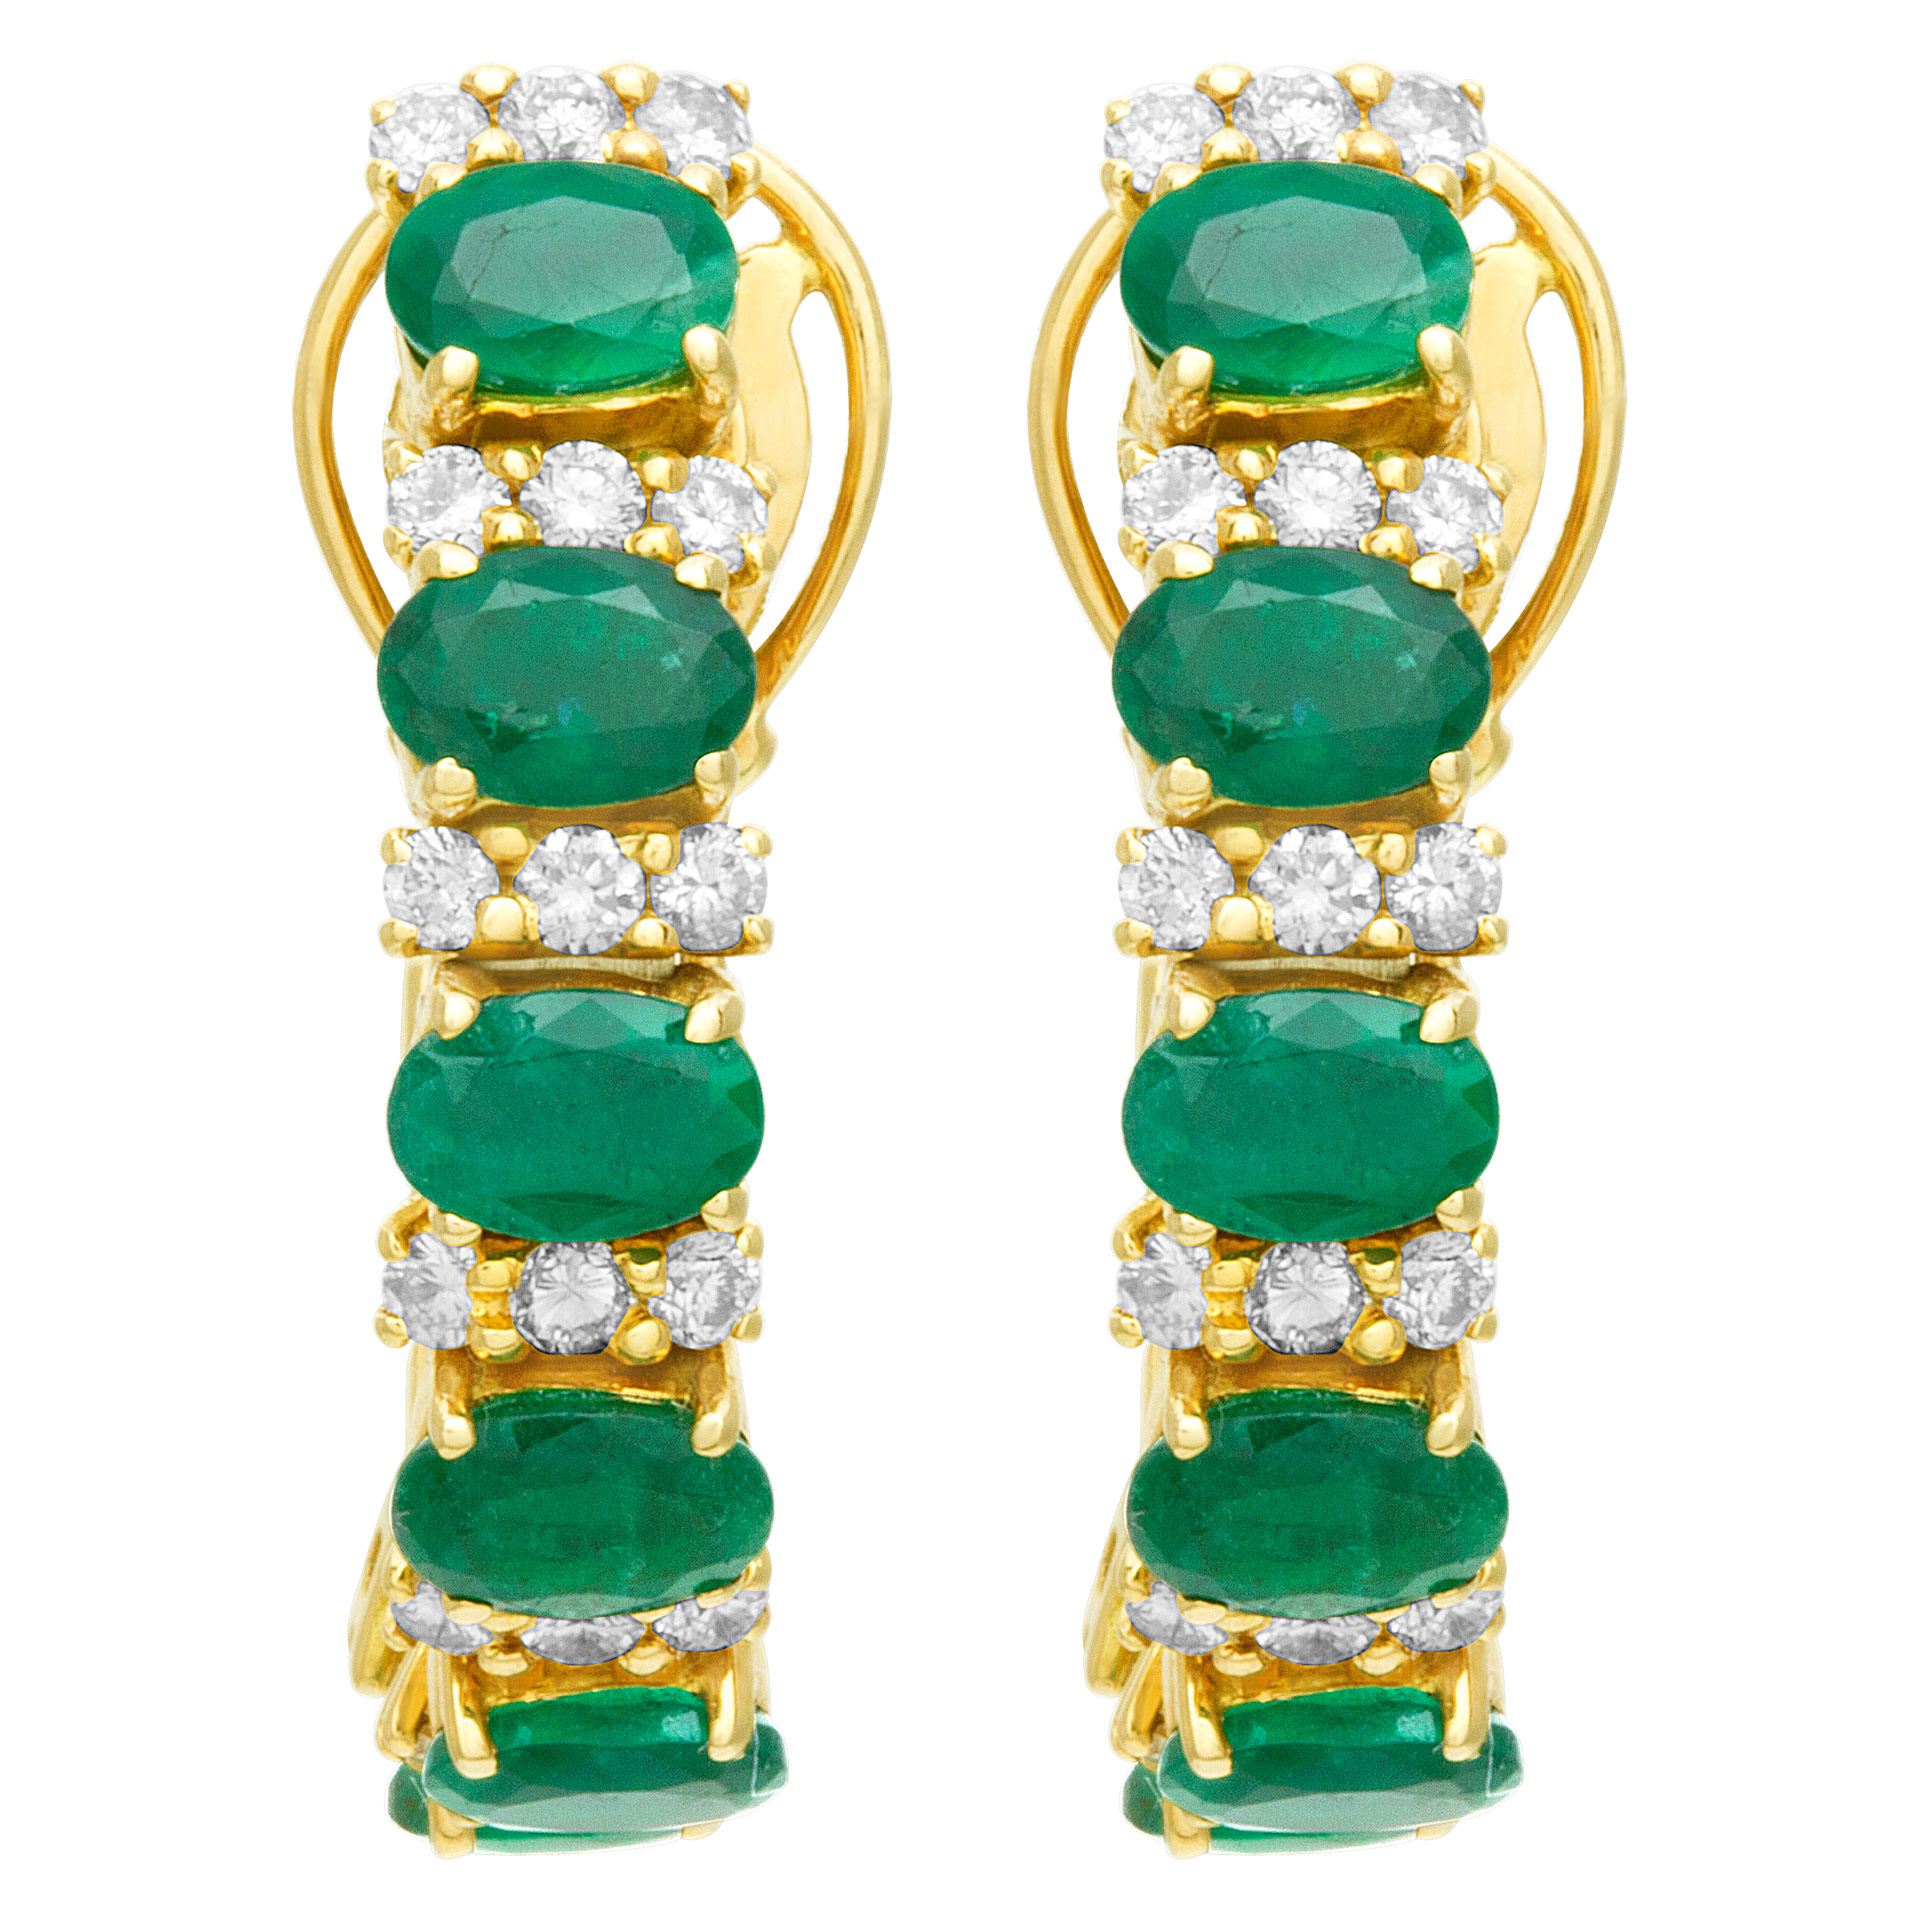 Emerald and diamond hoop earrings in 18k gold